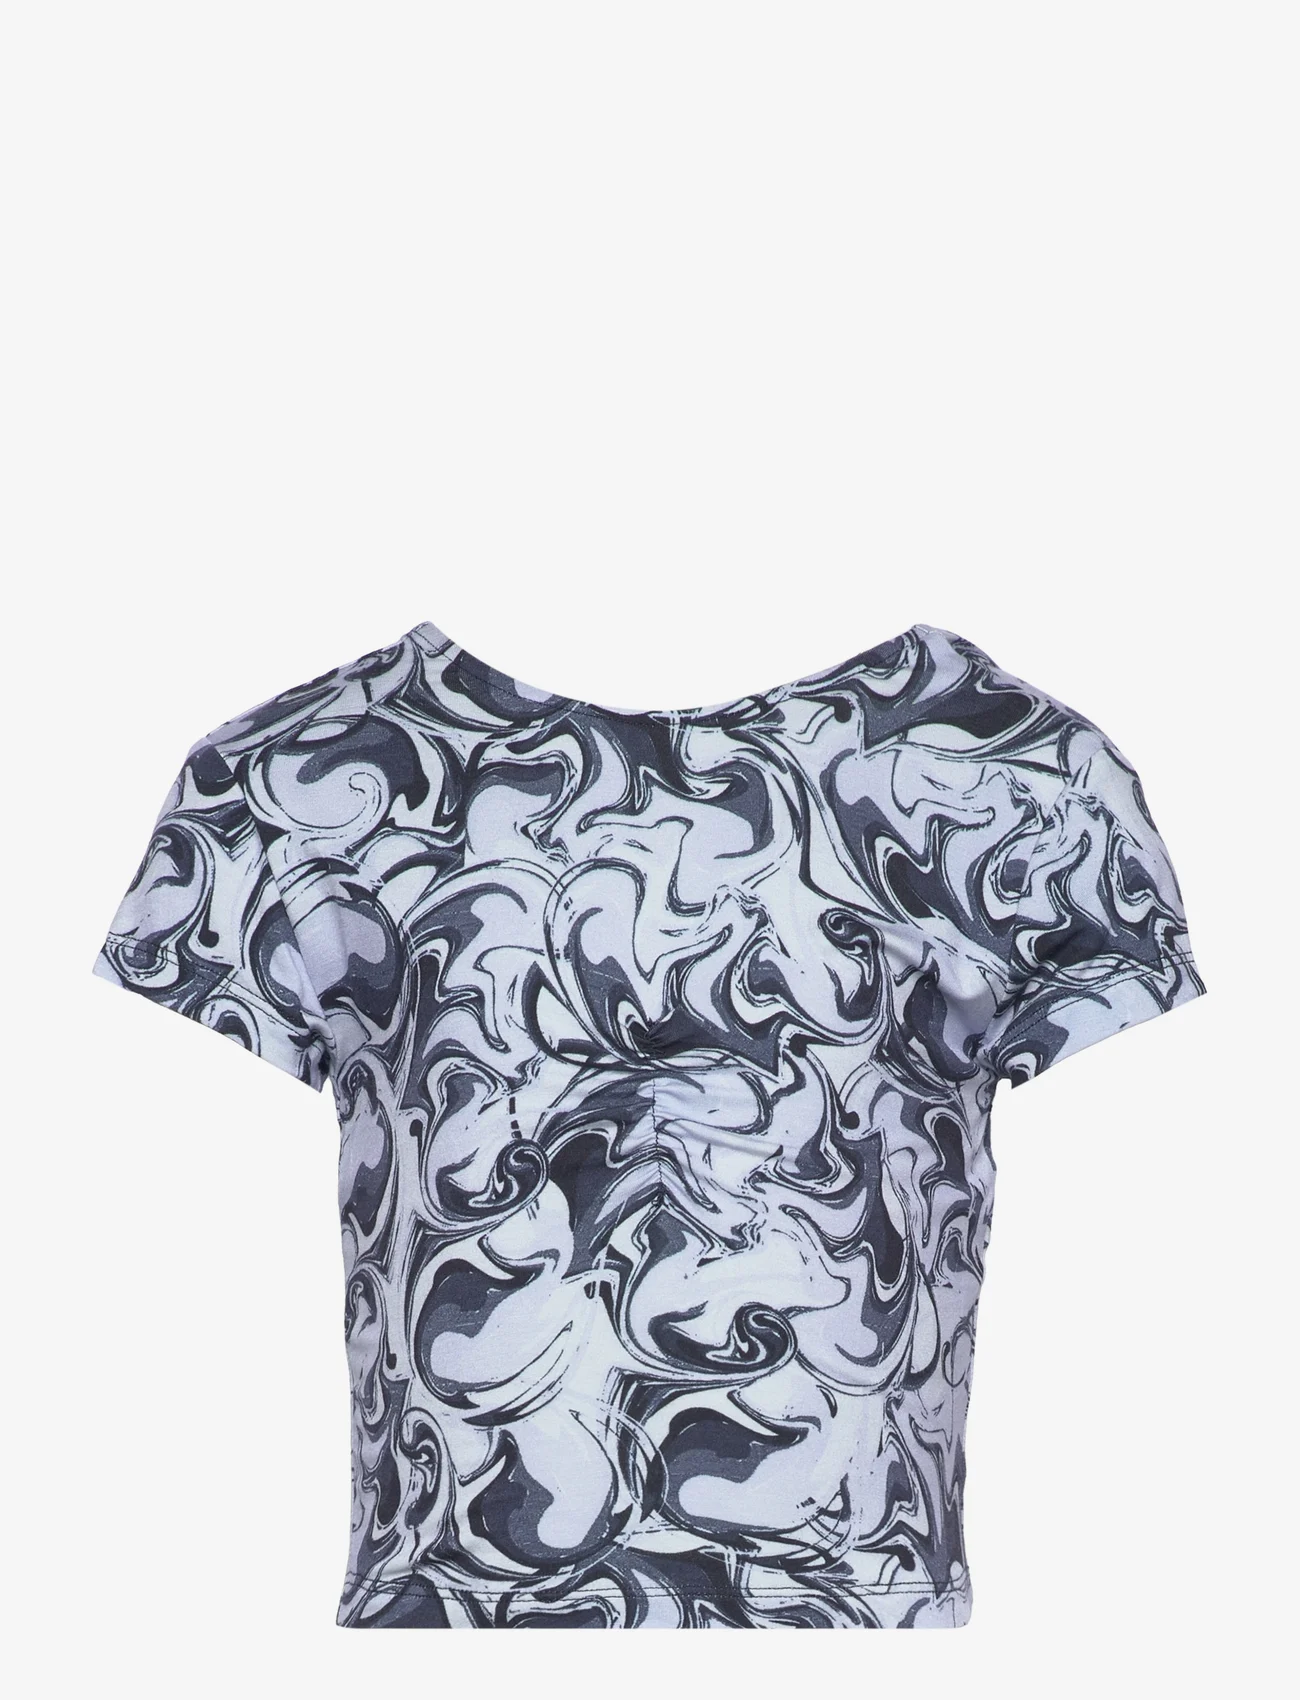 Rosemunde Kids - Viscose t-shirt - short-sleeved t-shirts - navy swirl print - 0